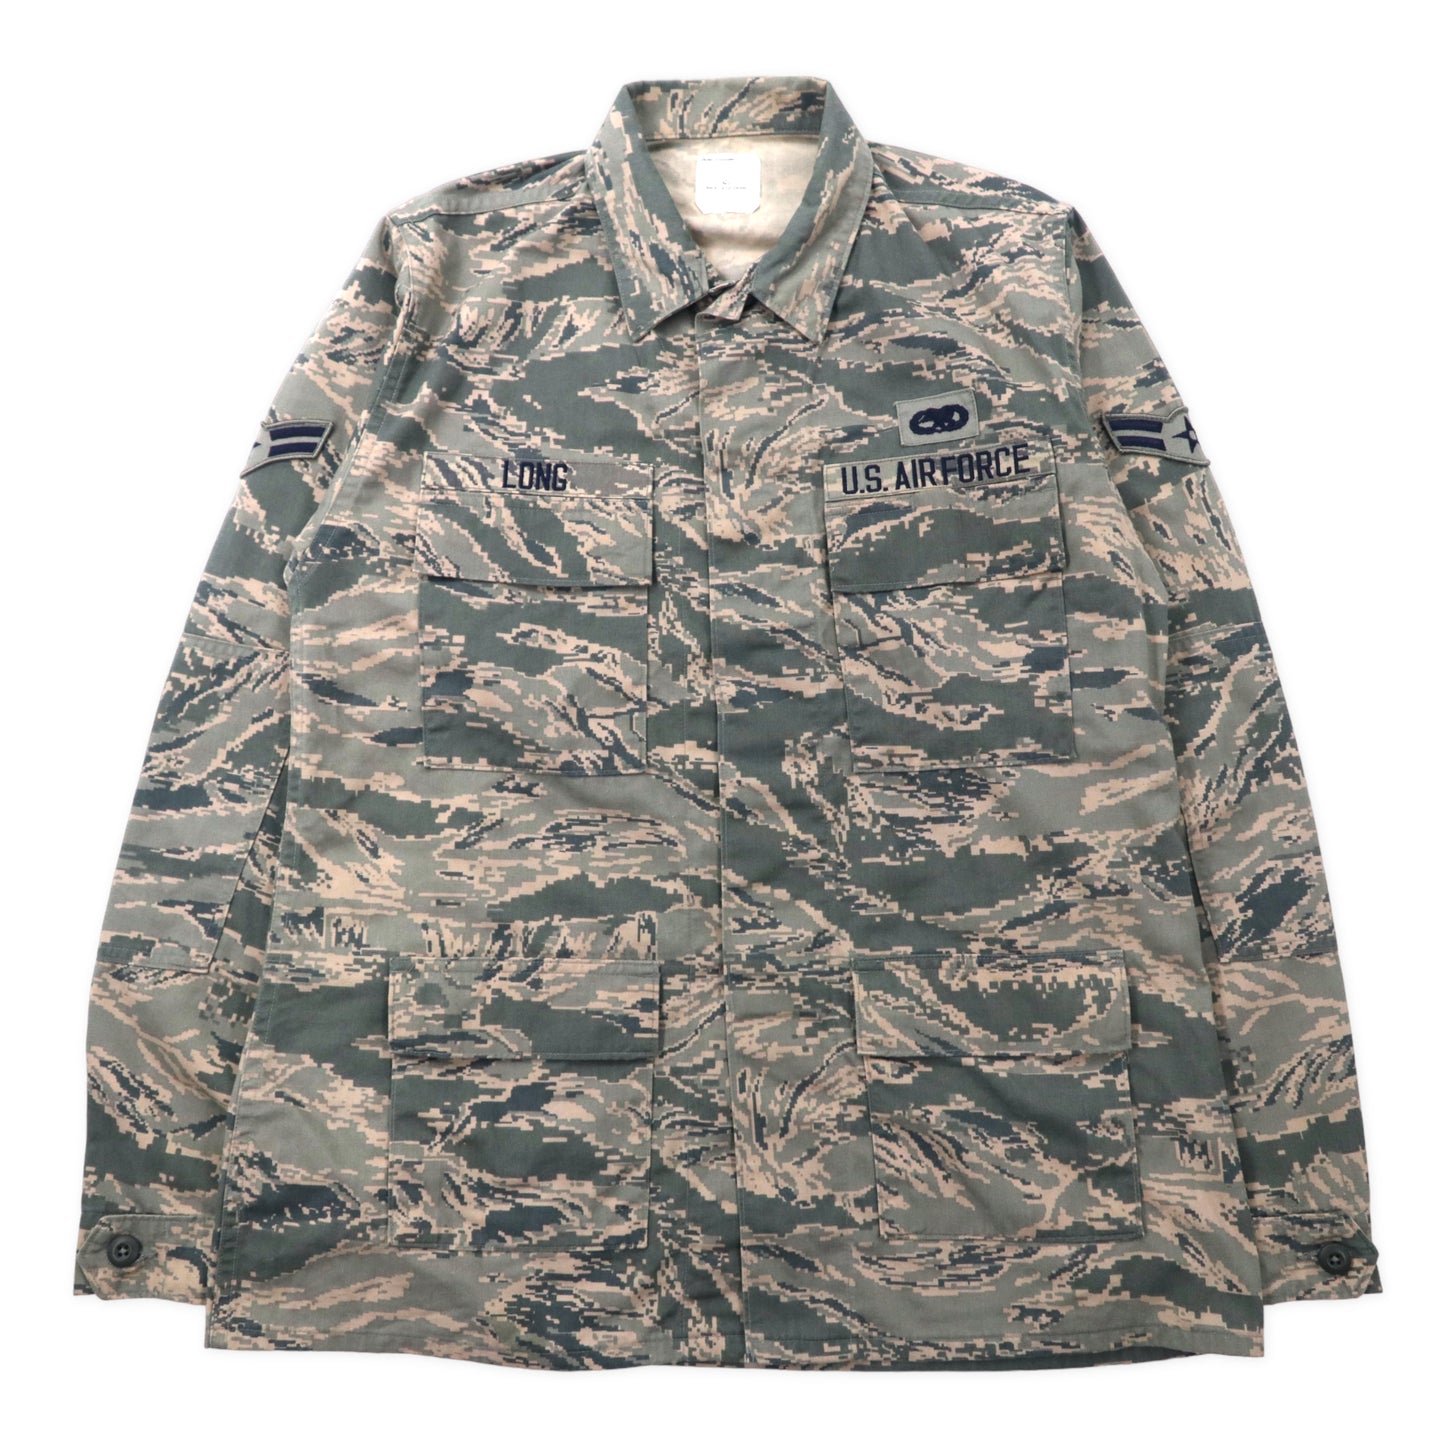 US Air Force ABU Jacket 42L Digital Camo Military Cotton 8415-01 